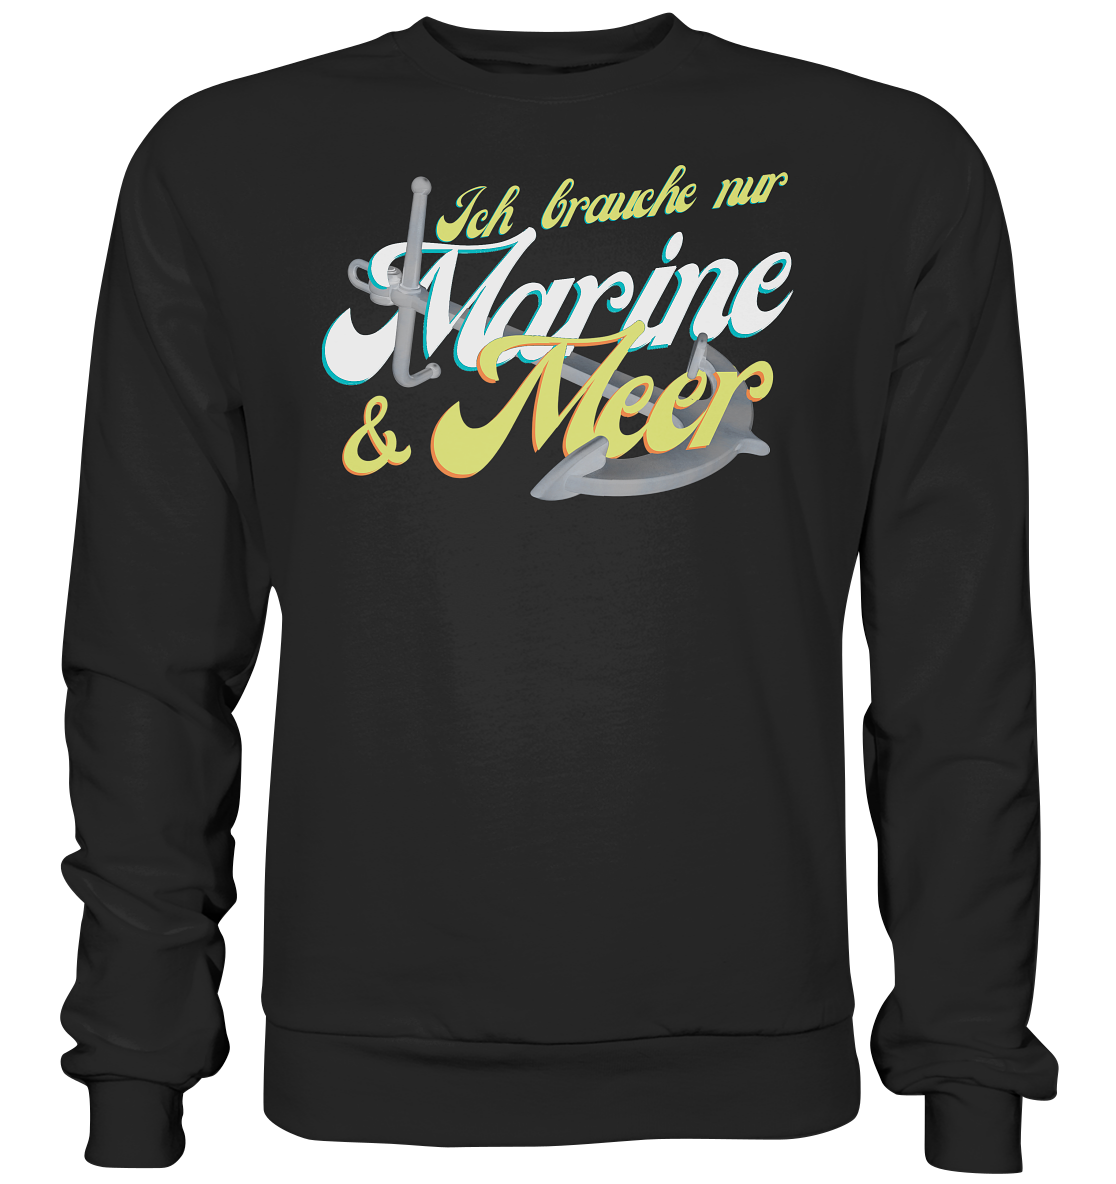 Marine & Meer - Premium Sweatshirt